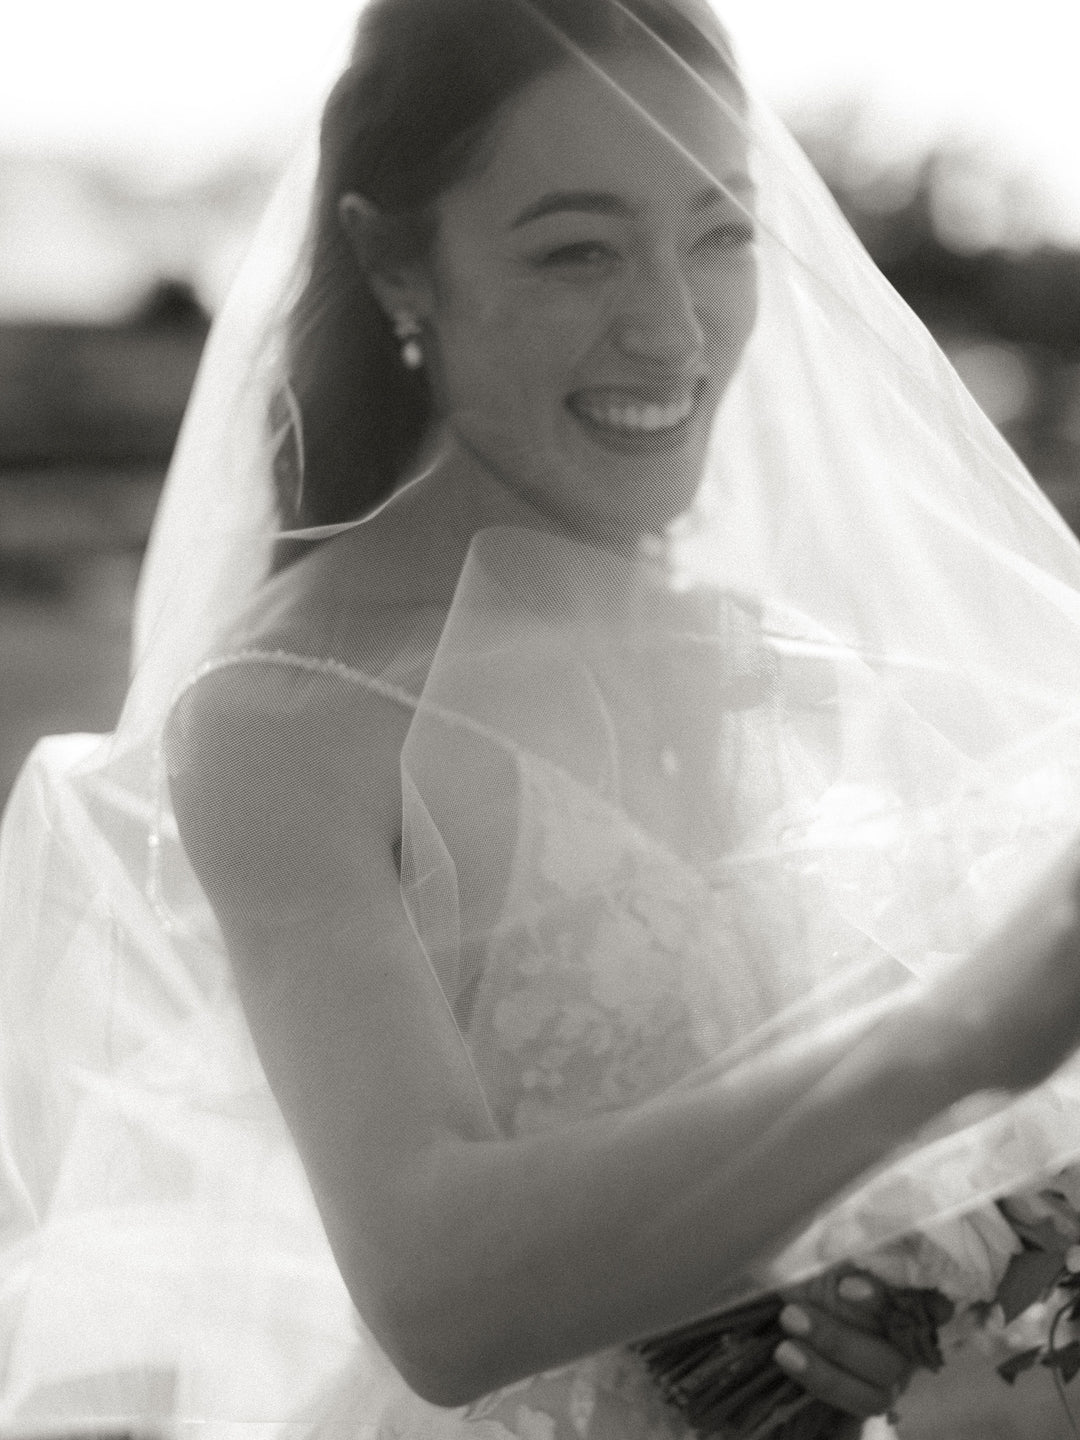 Bride wearing a wedding veil, black and white bridal portrait.